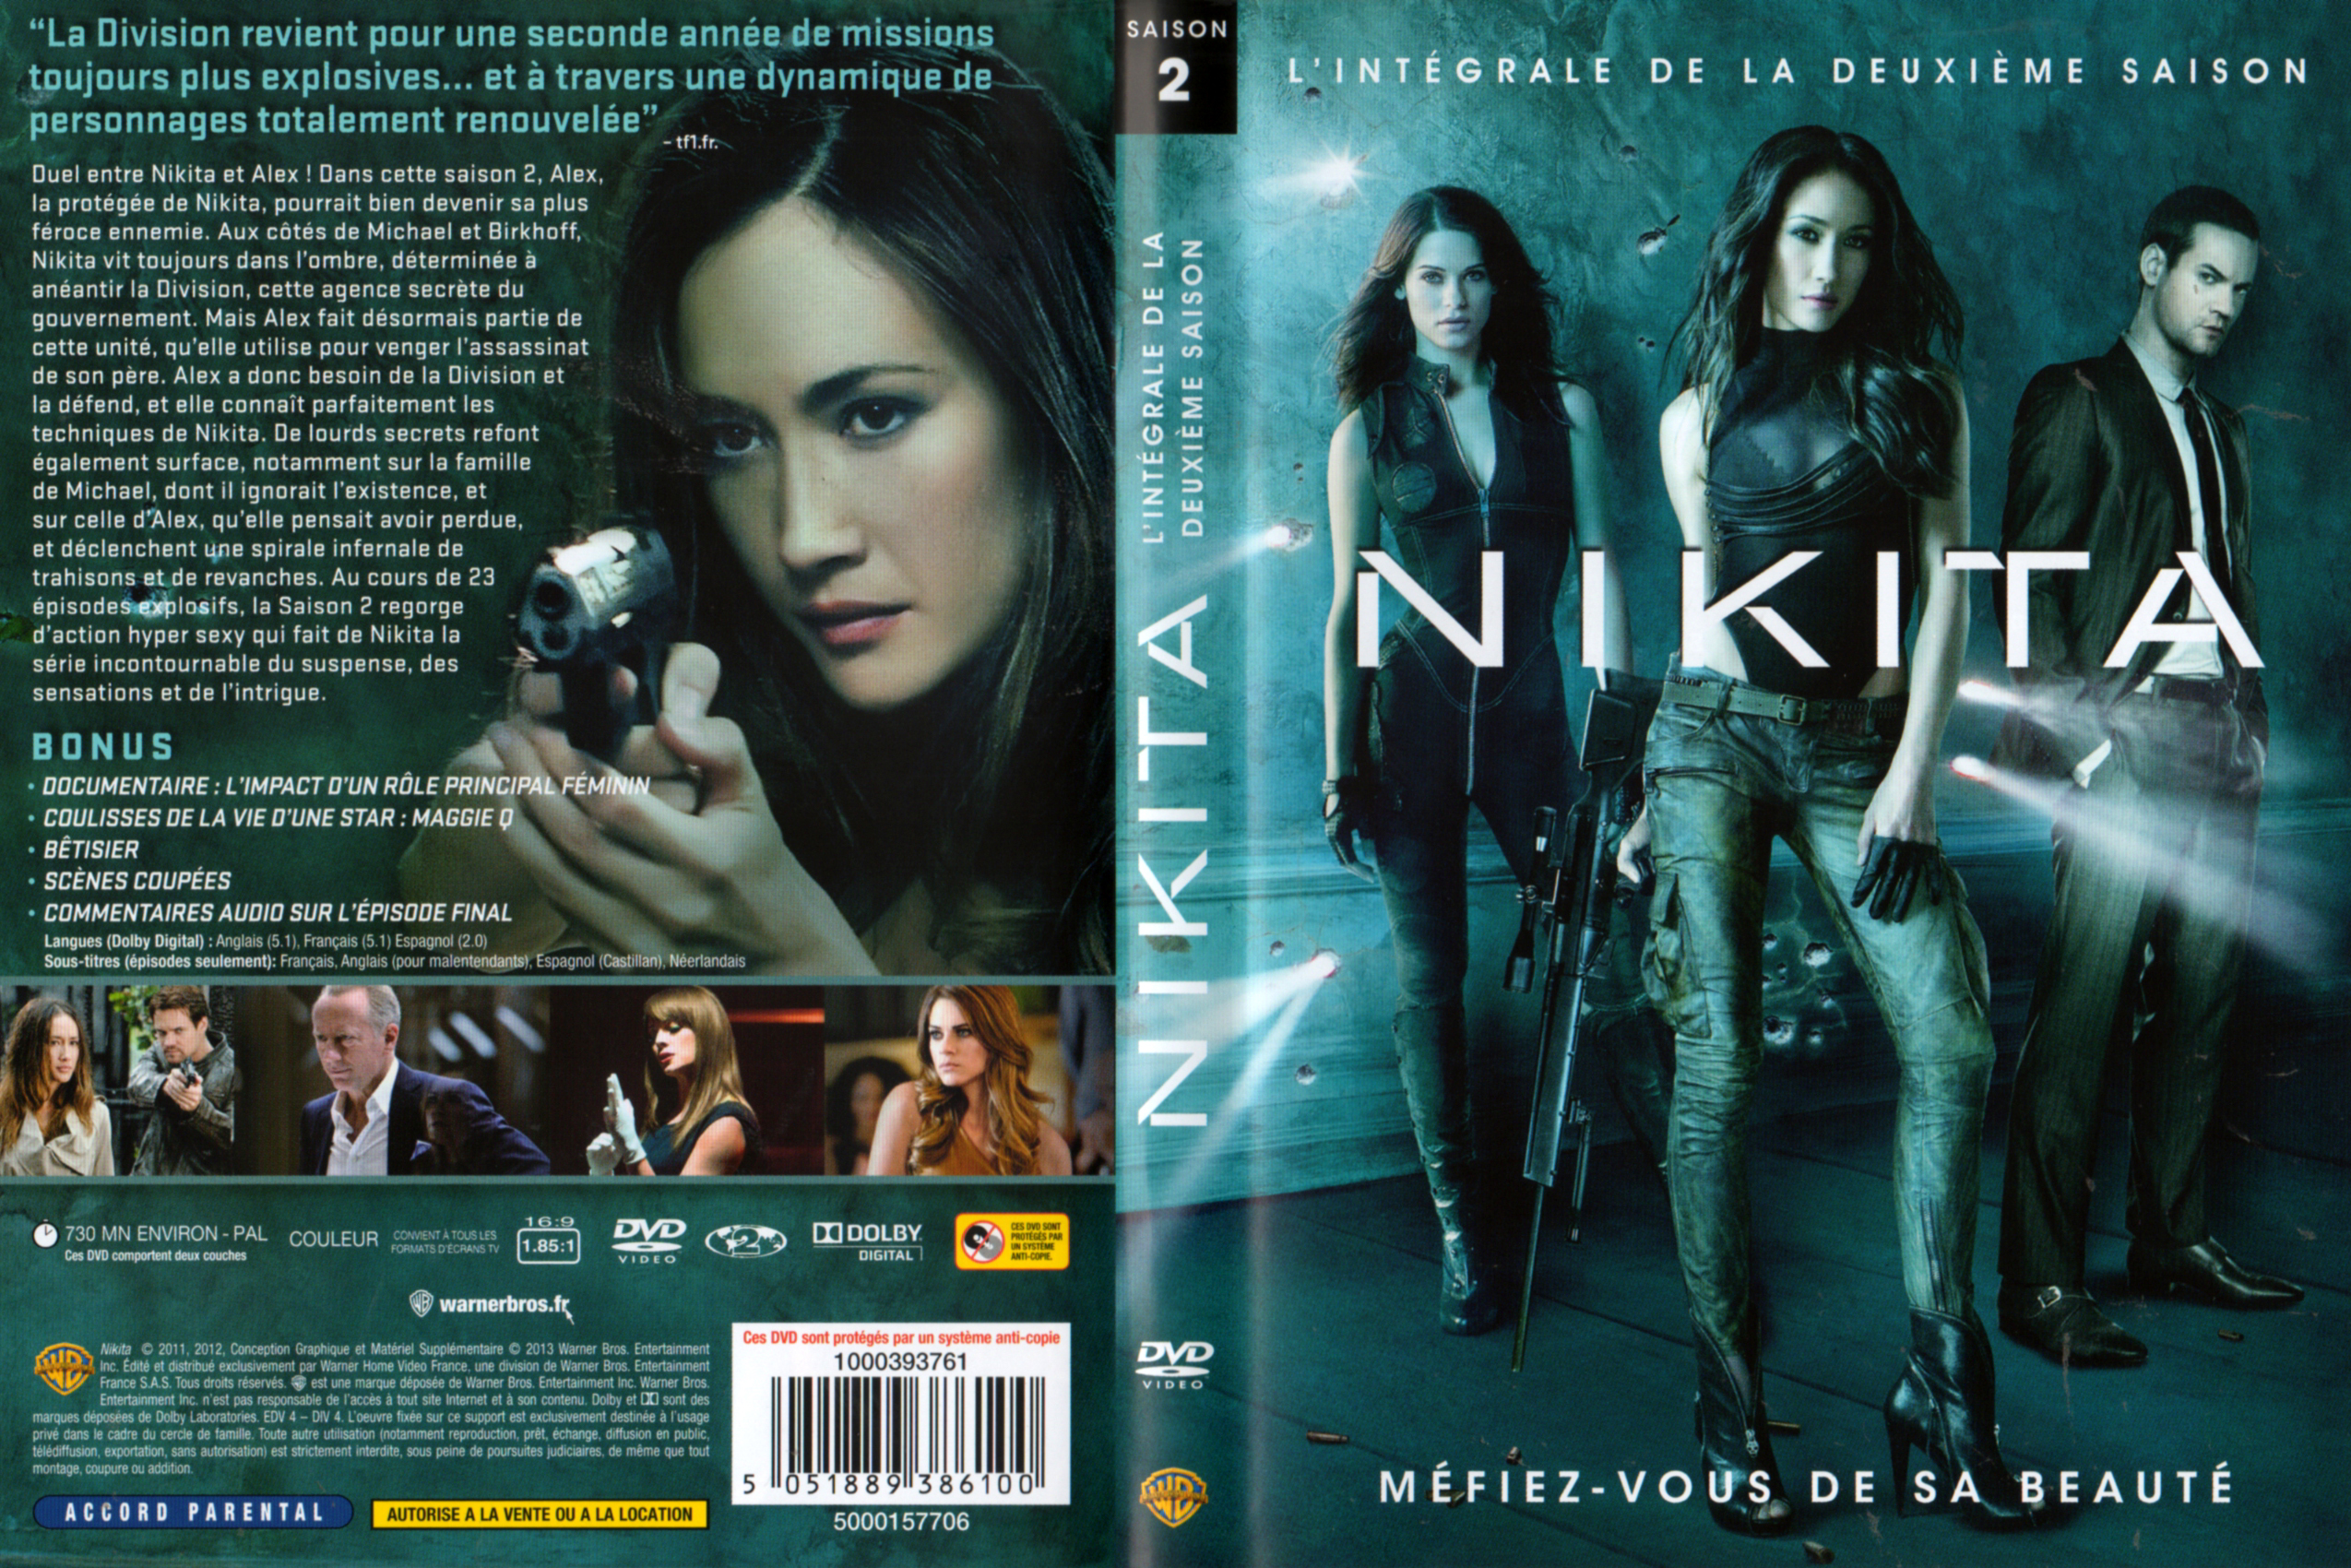 Jaquette DVD Nikita saison 2